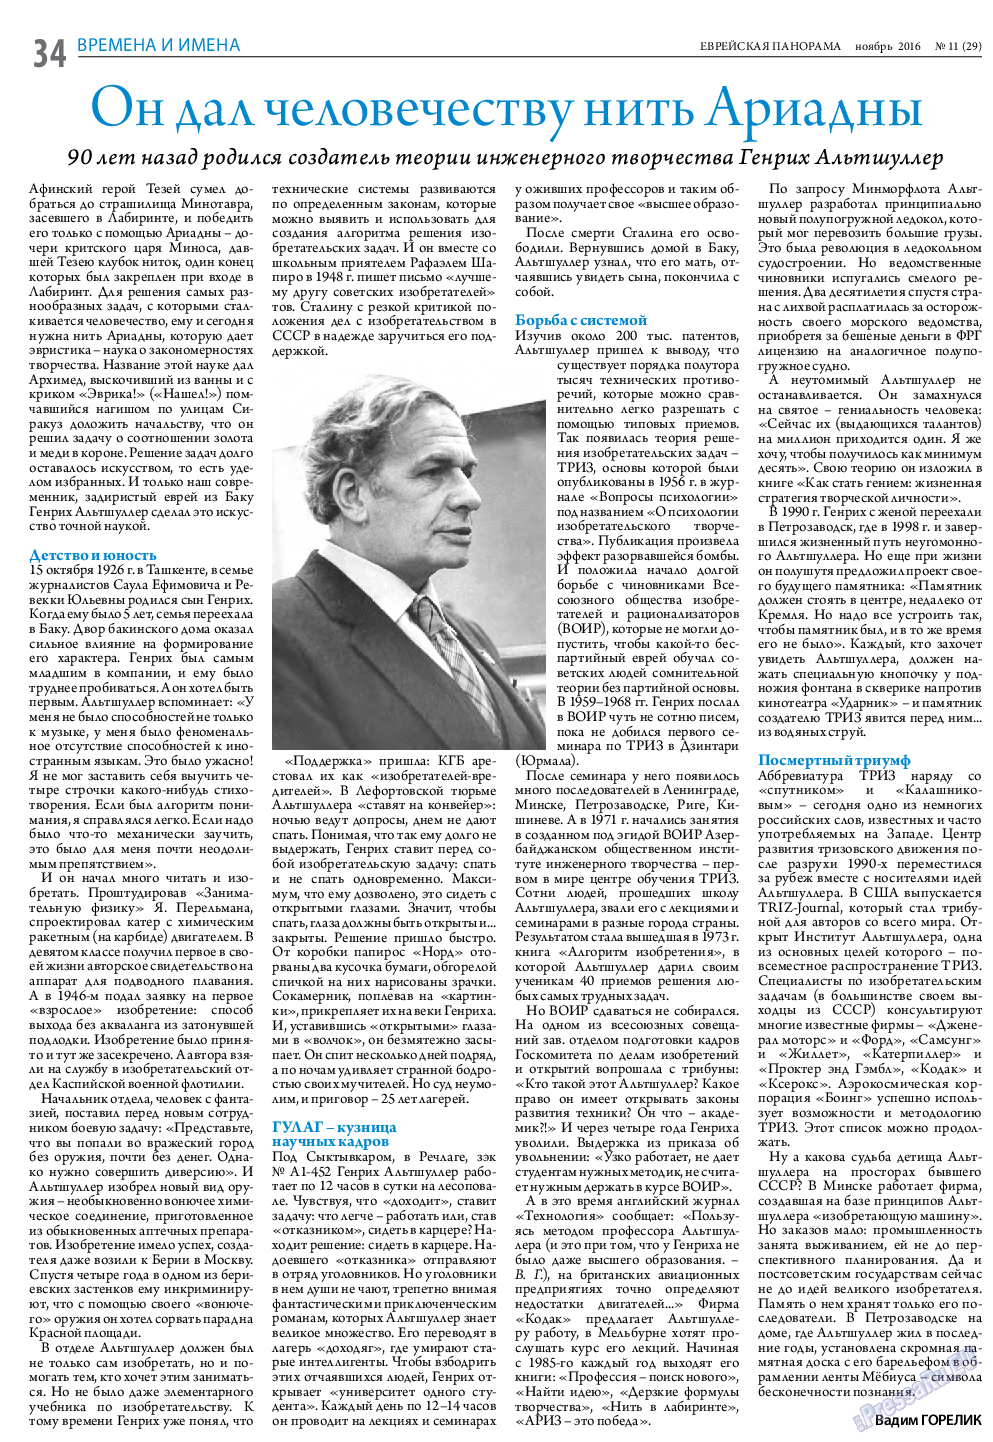 Еврейская панорама, газета. 2016 №11 стр.34